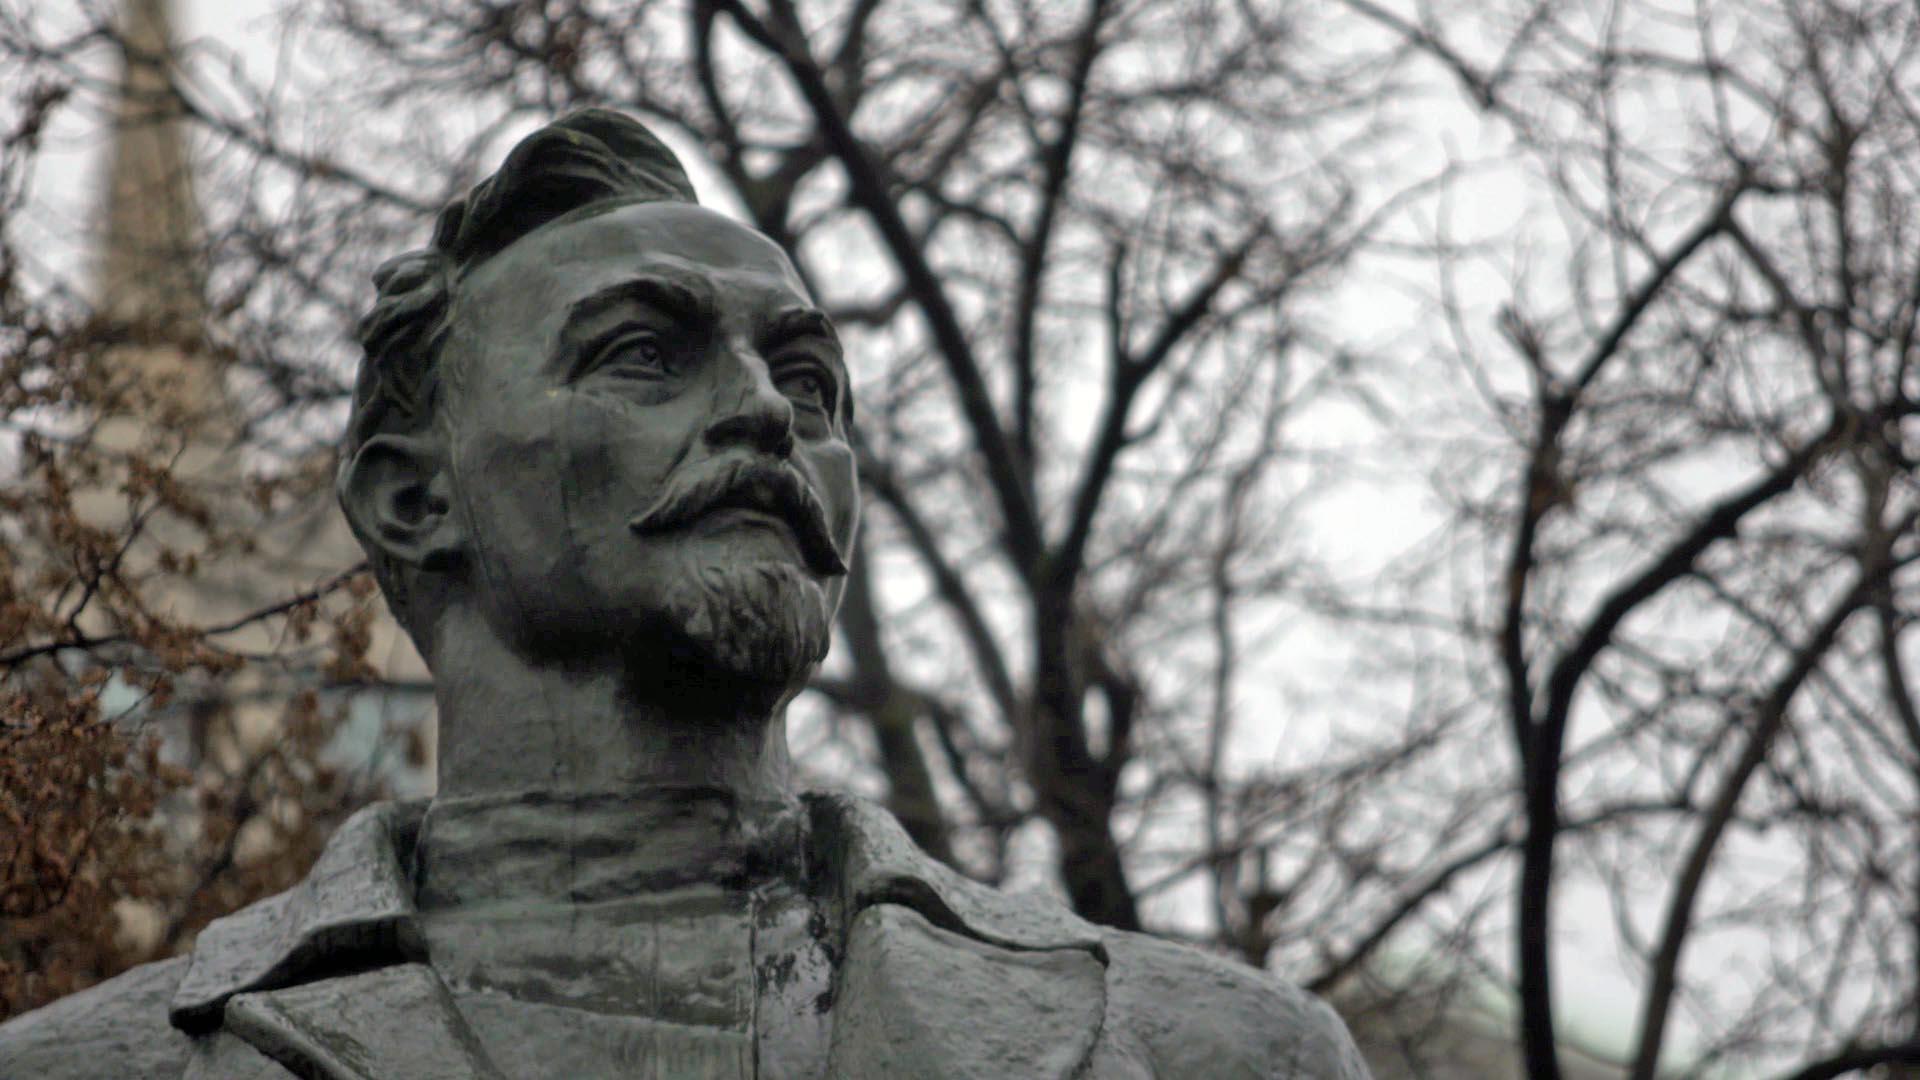 The monument to “Iron Felix” Dzerzhinsky, the founder and patron saint of the Soviet secret police.